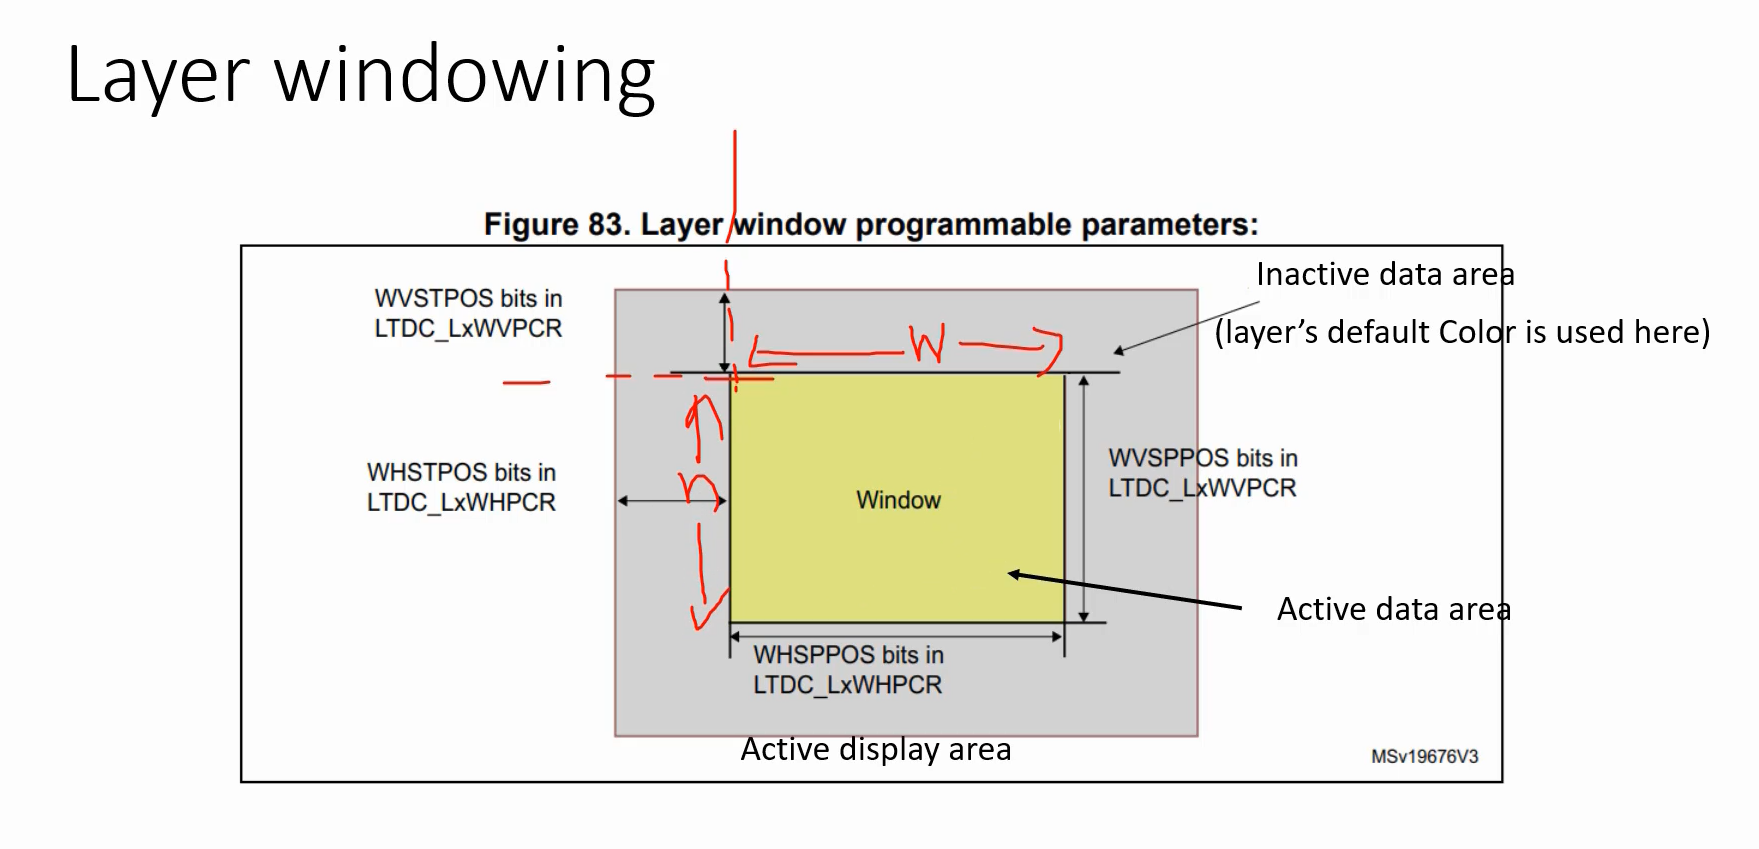 Figure 6. Layer windowing